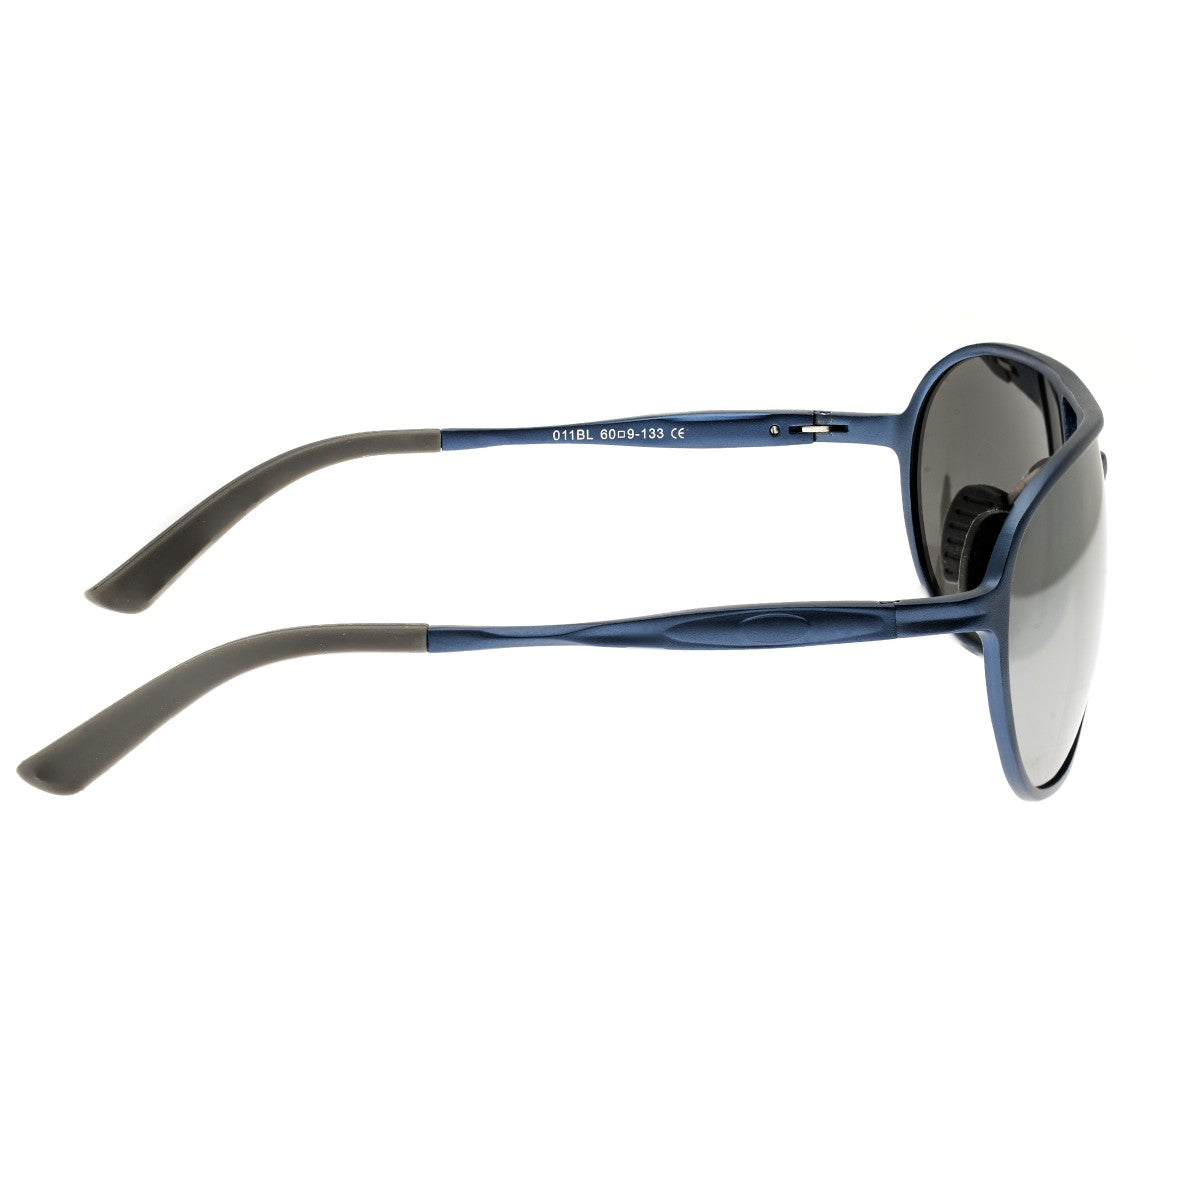 Breed Earhart Aluminium Polarized Sunglasses - Blue/Silver - BSG011BL